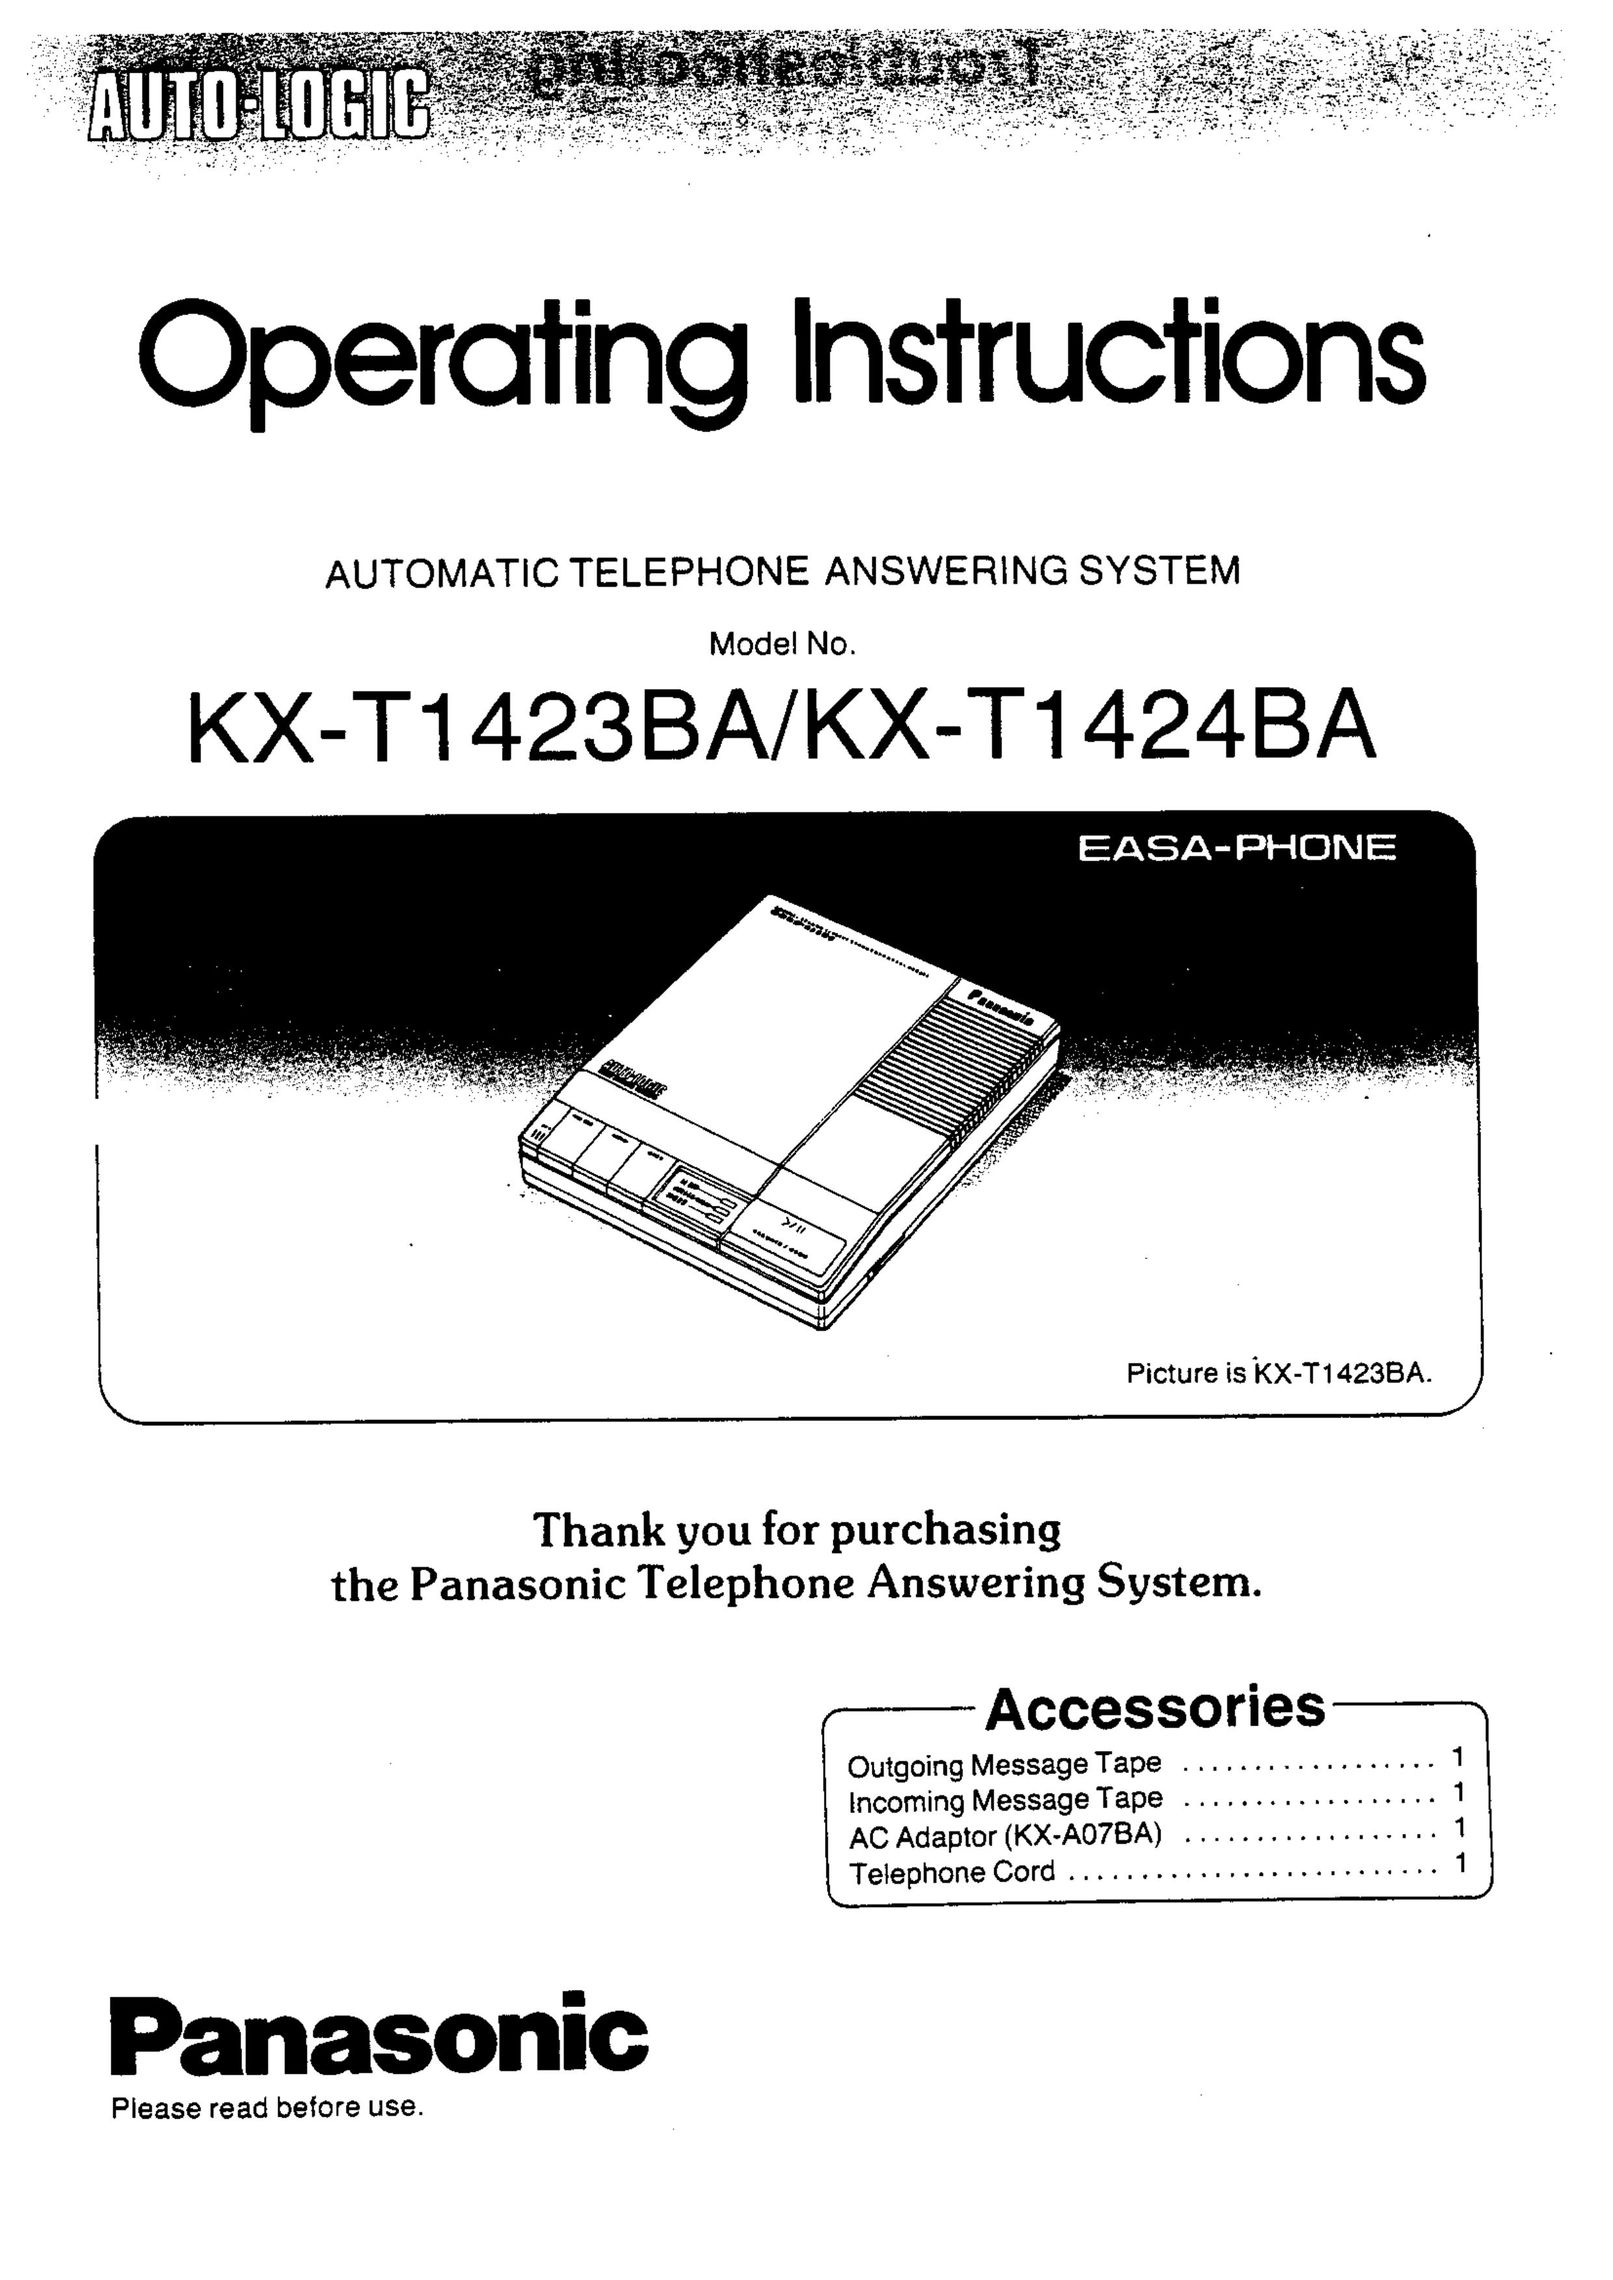 Panasonic KX-T1423BA/KX-T1424BA Answering Machine User Manual